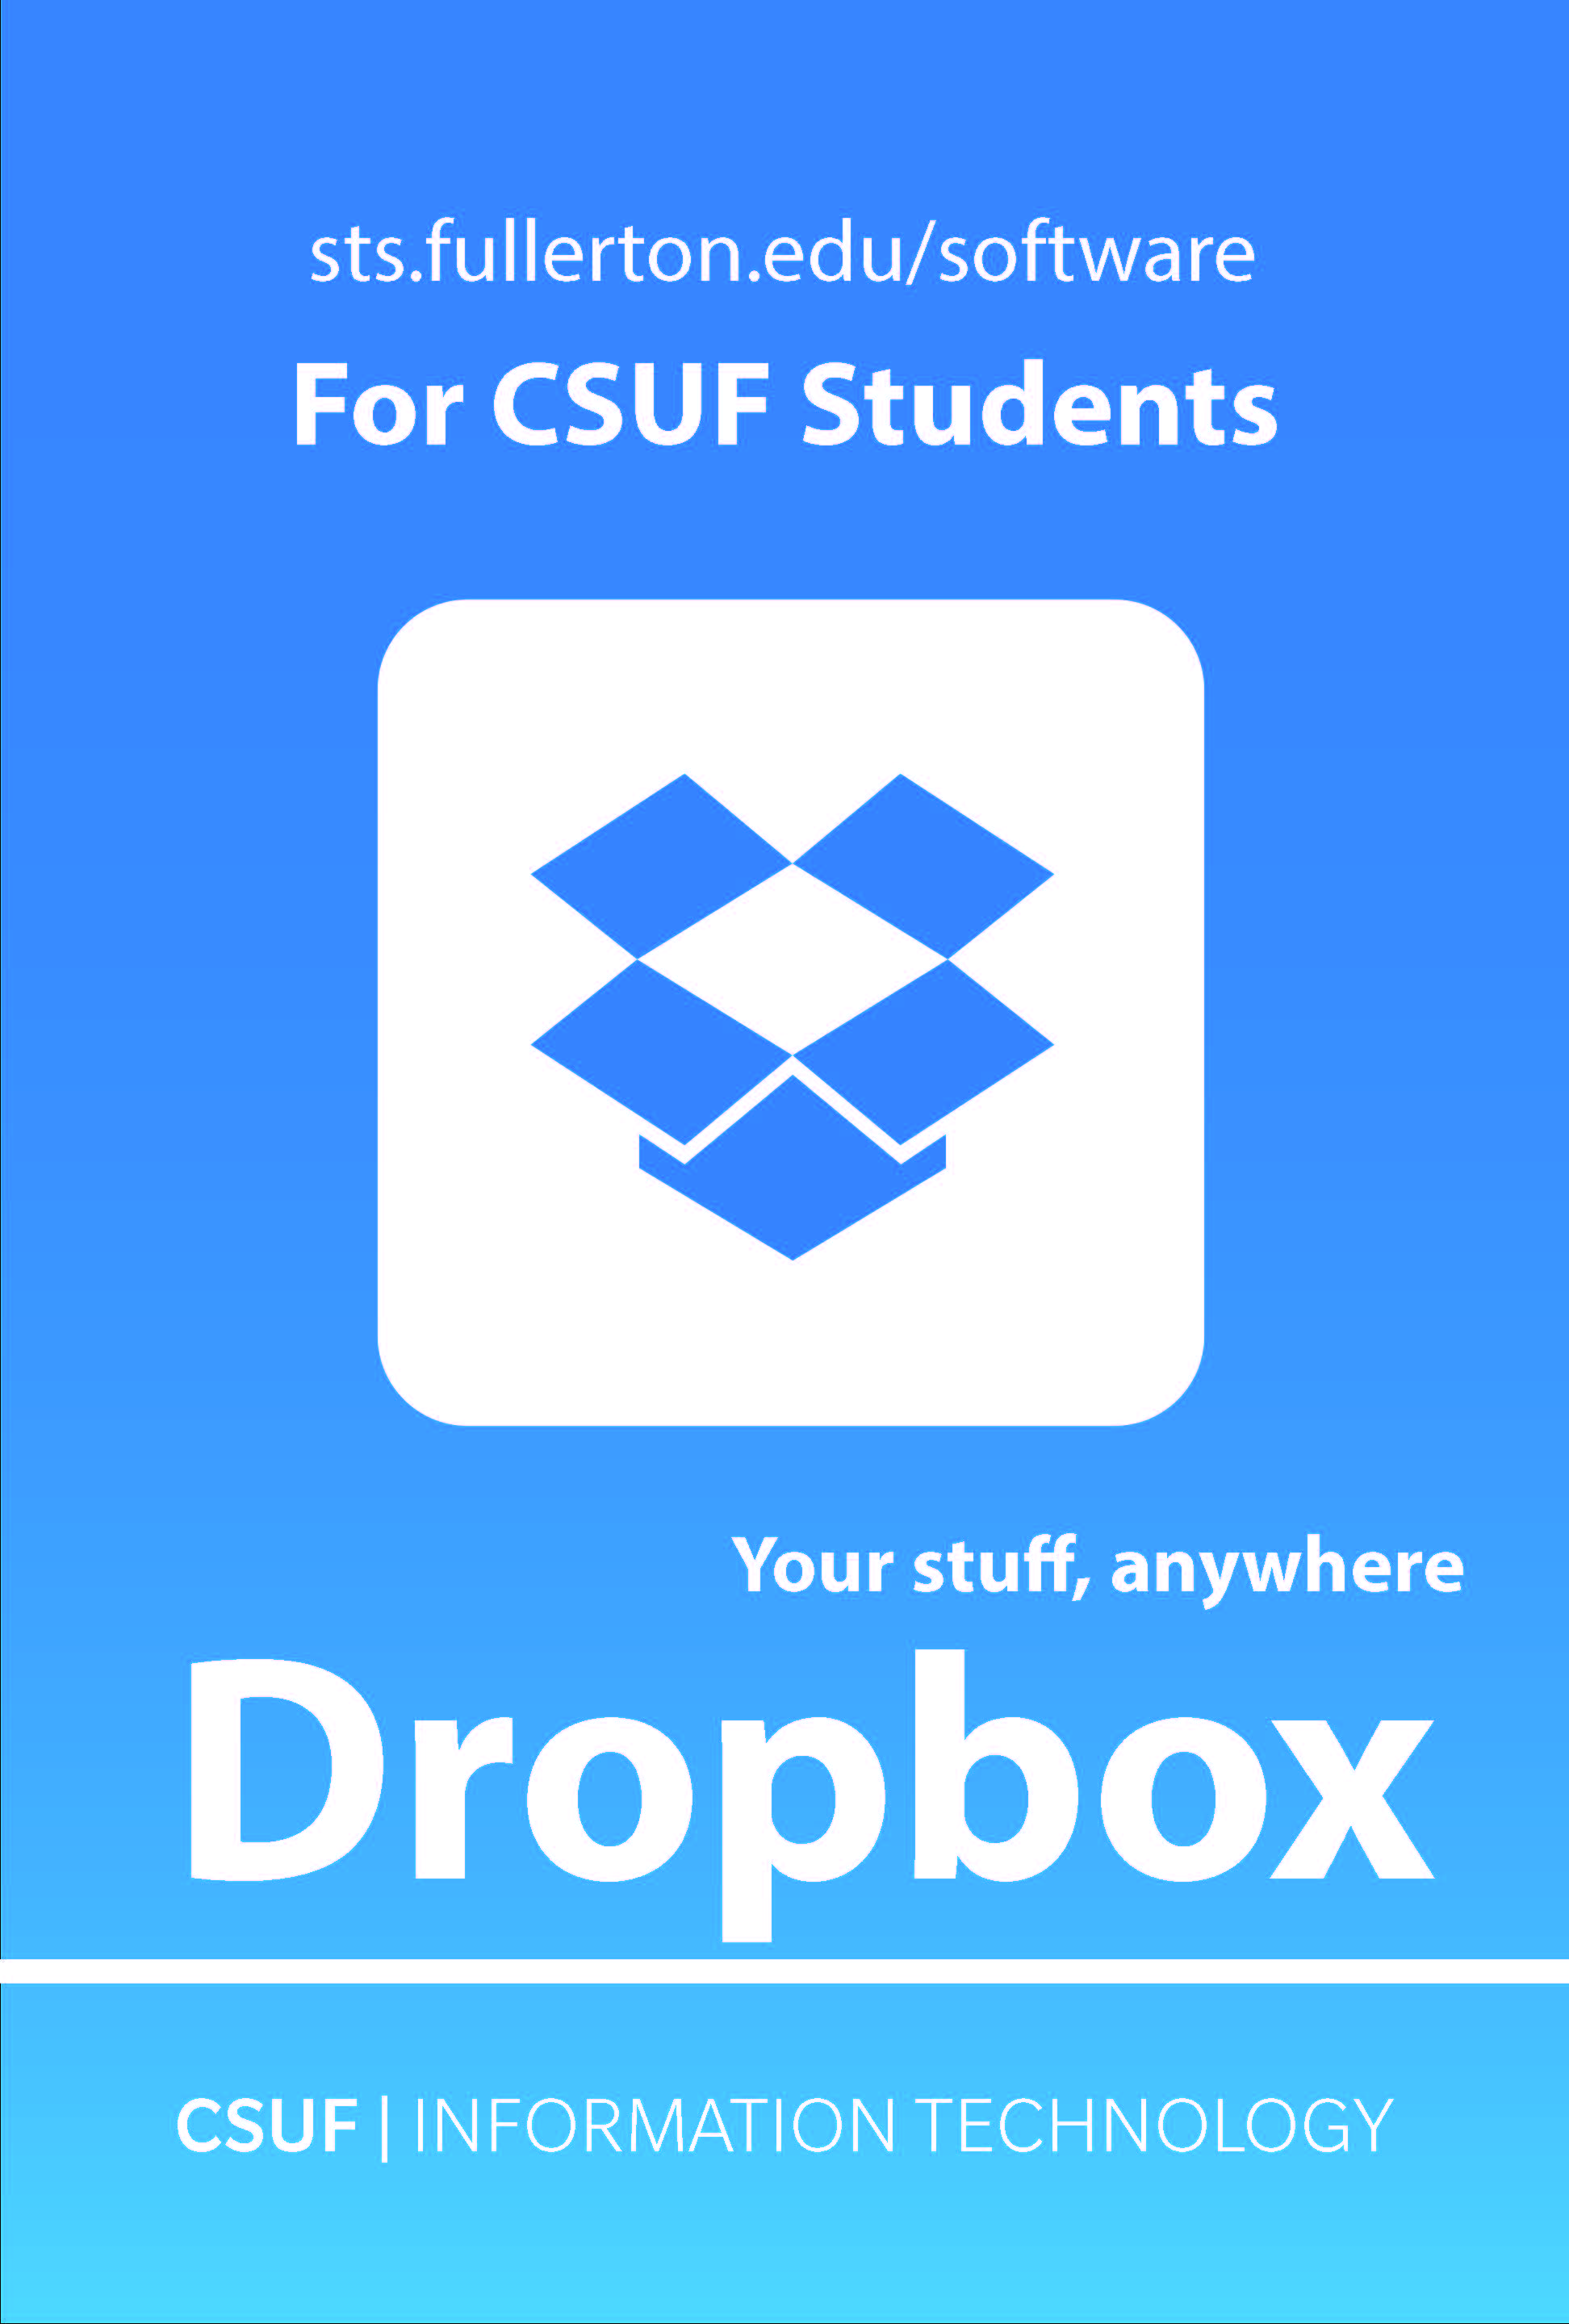 Student Services: Dropbox